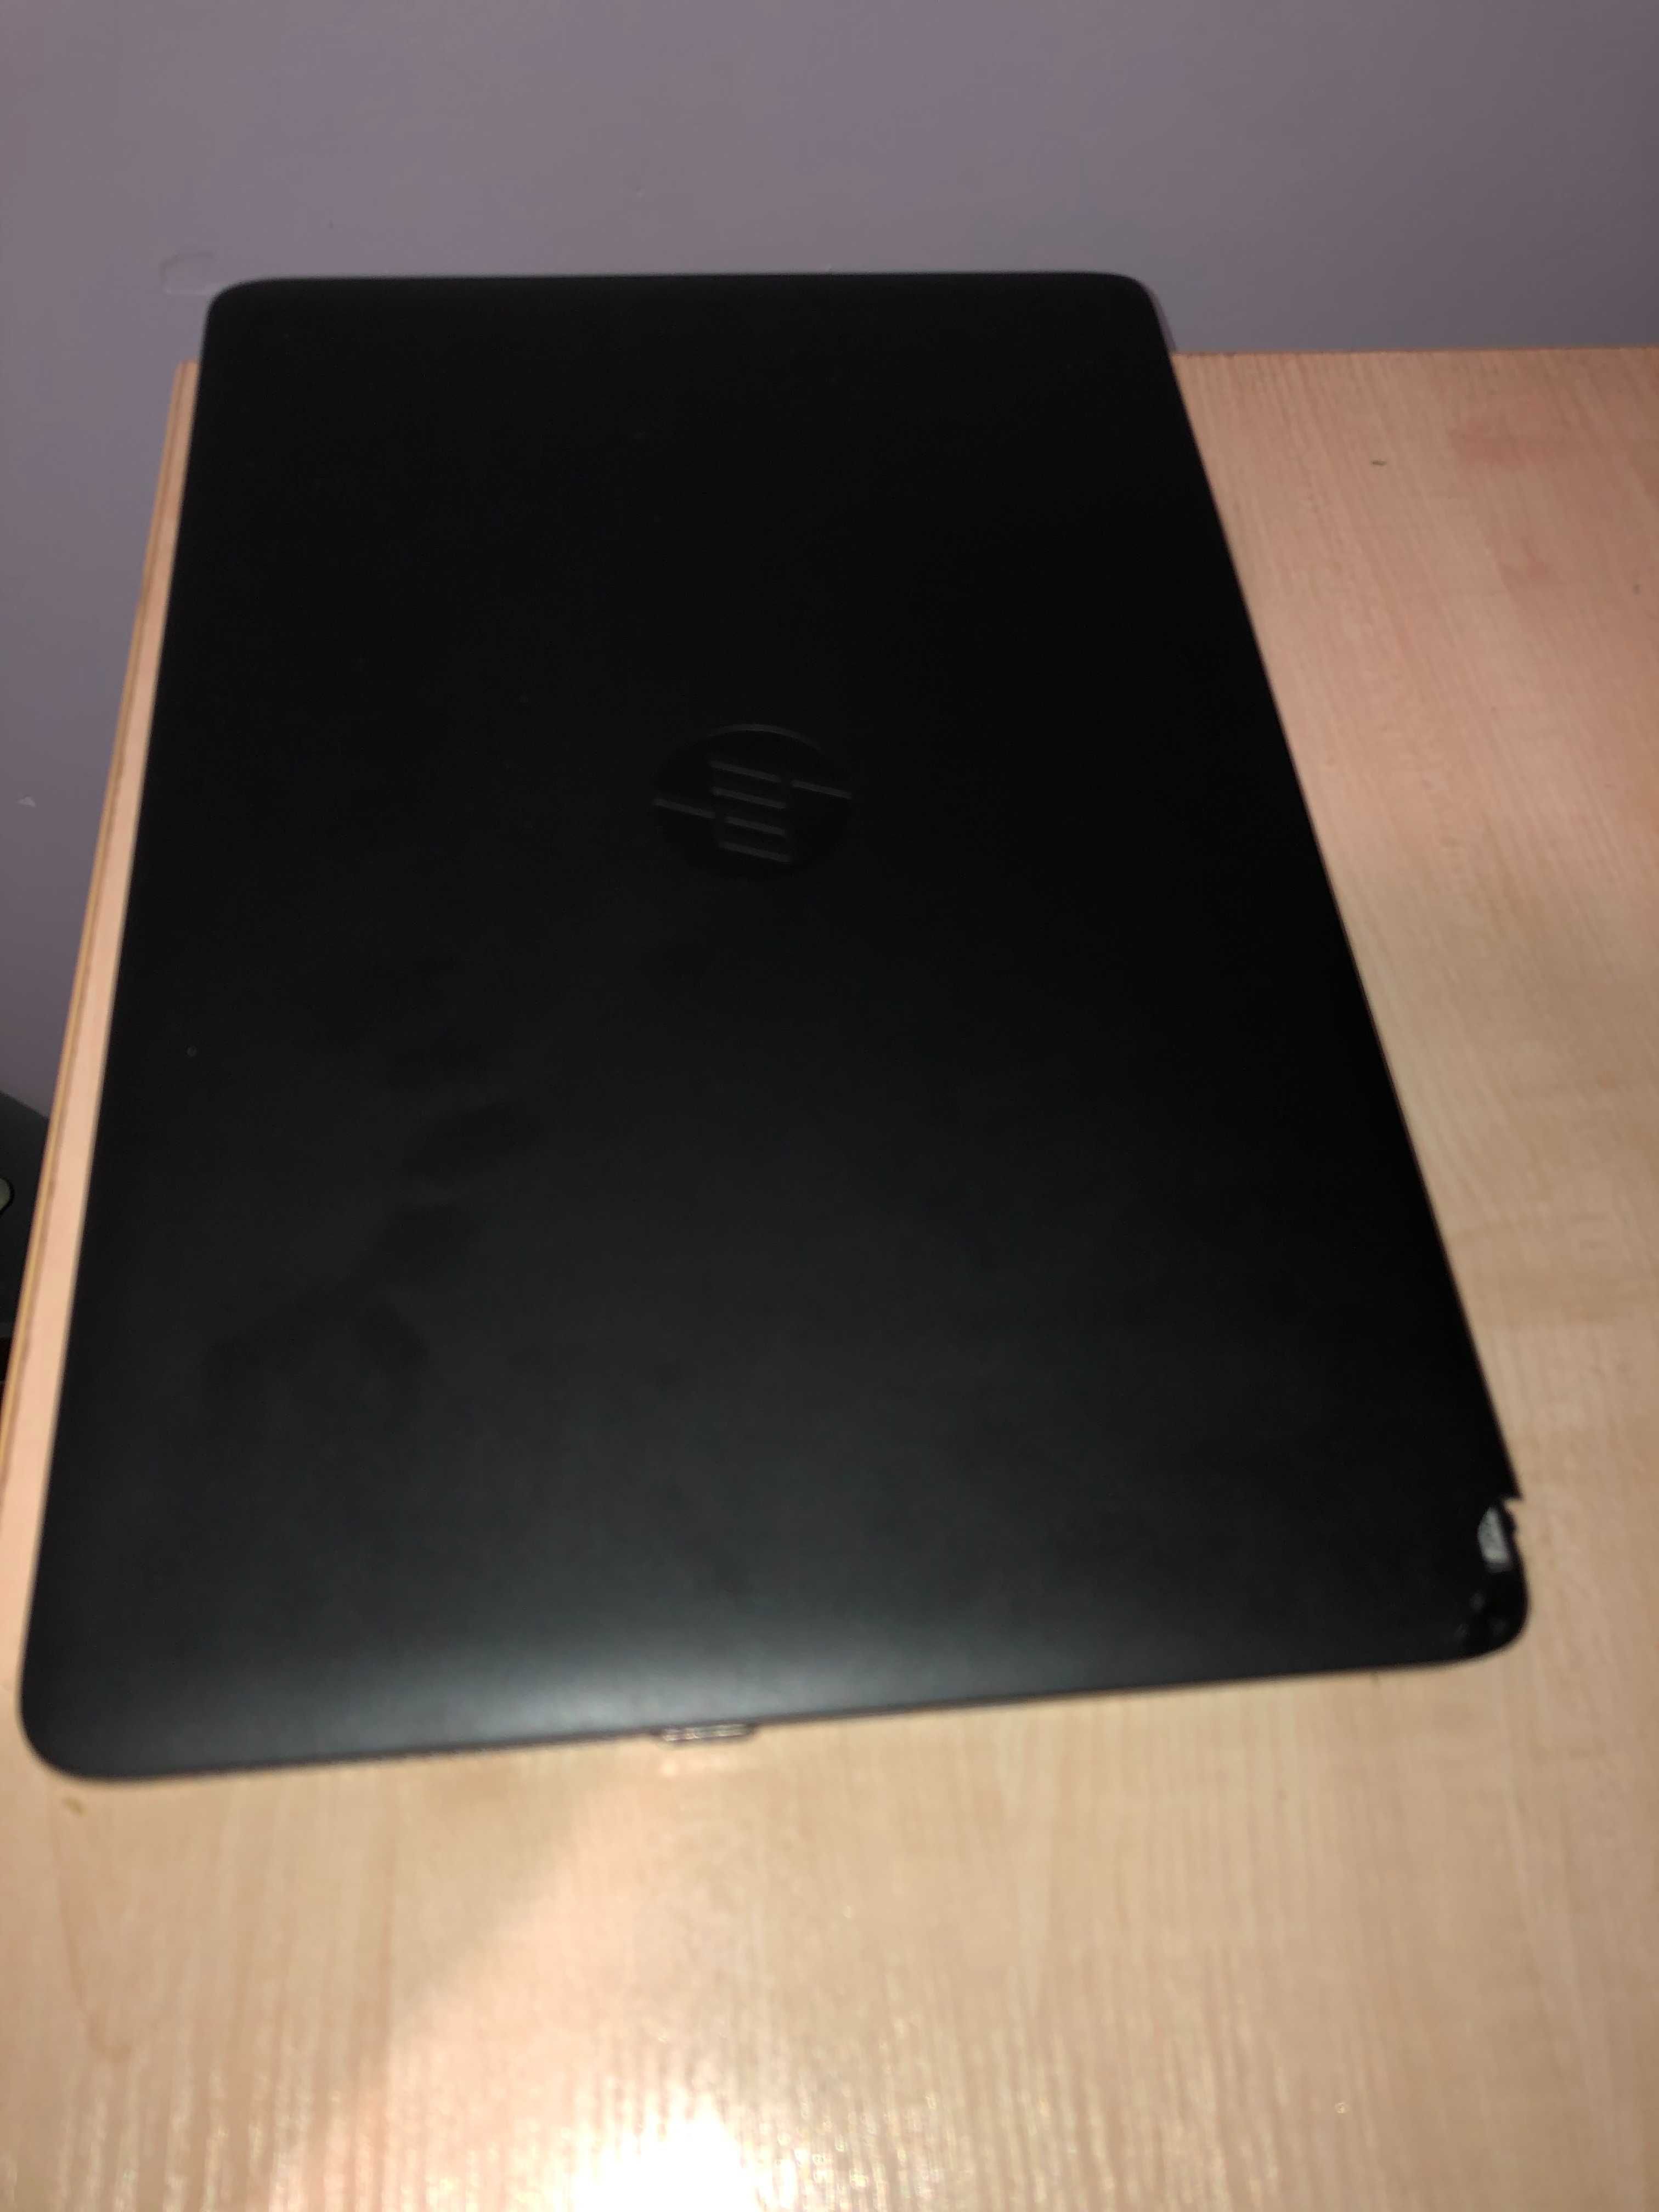 Laptop Elitebook 850 g2 240gb ssd 12 gb ram i5